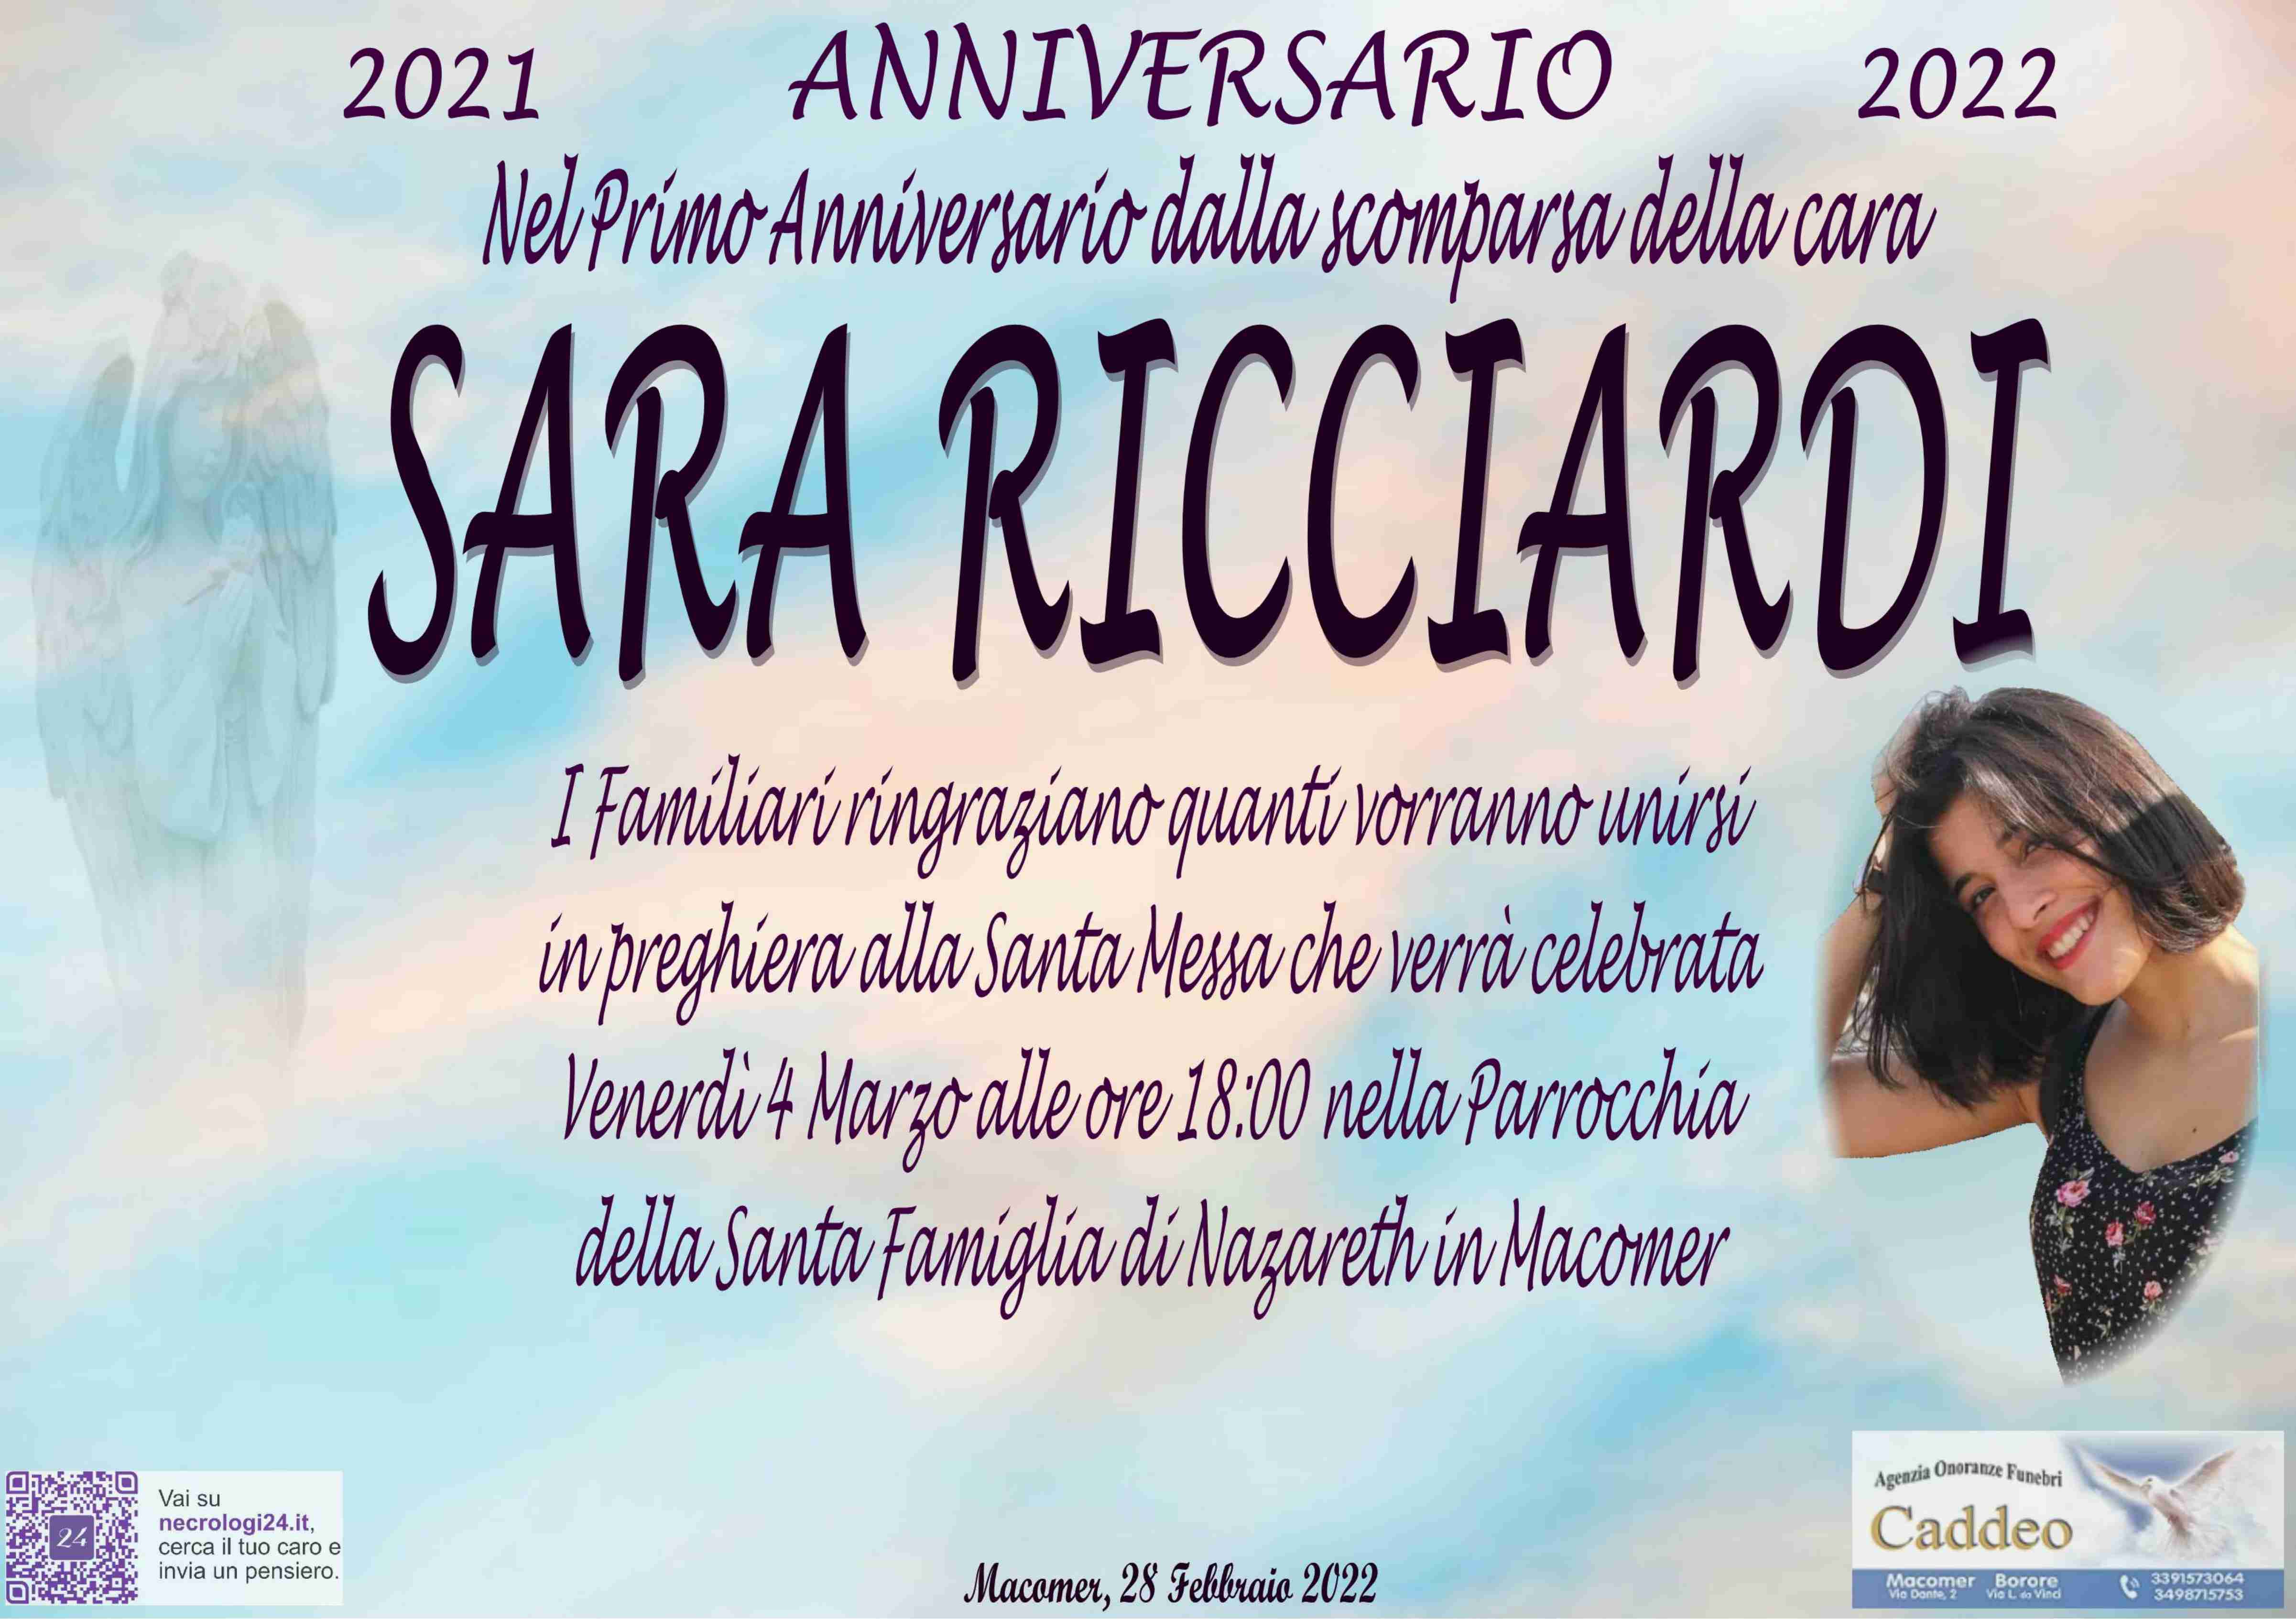 Sara Ricciardi